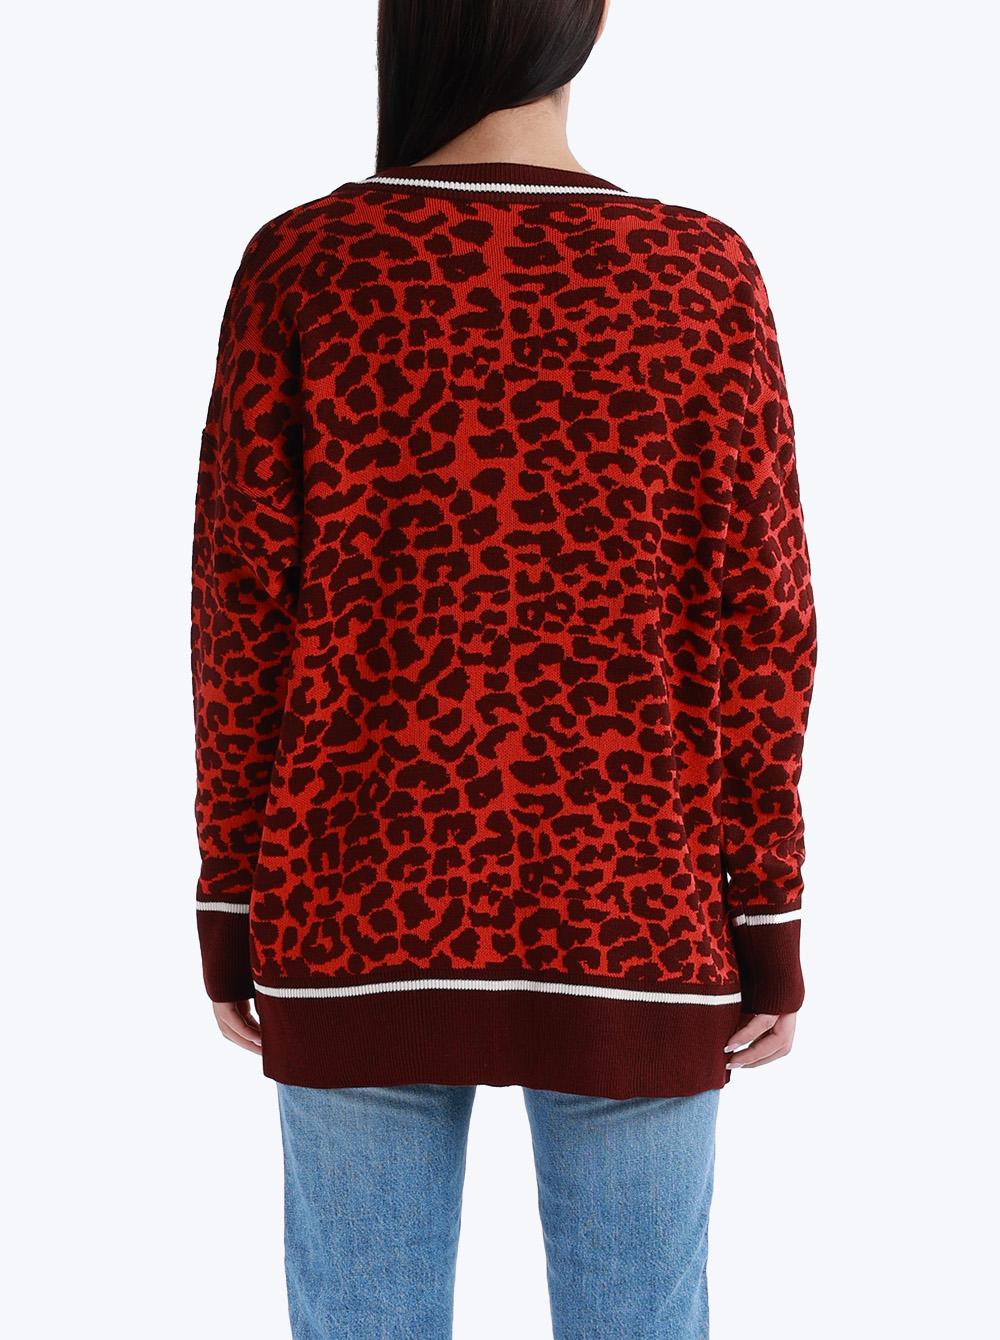 Slike QU STYLE Ženski džemper crveno-crni